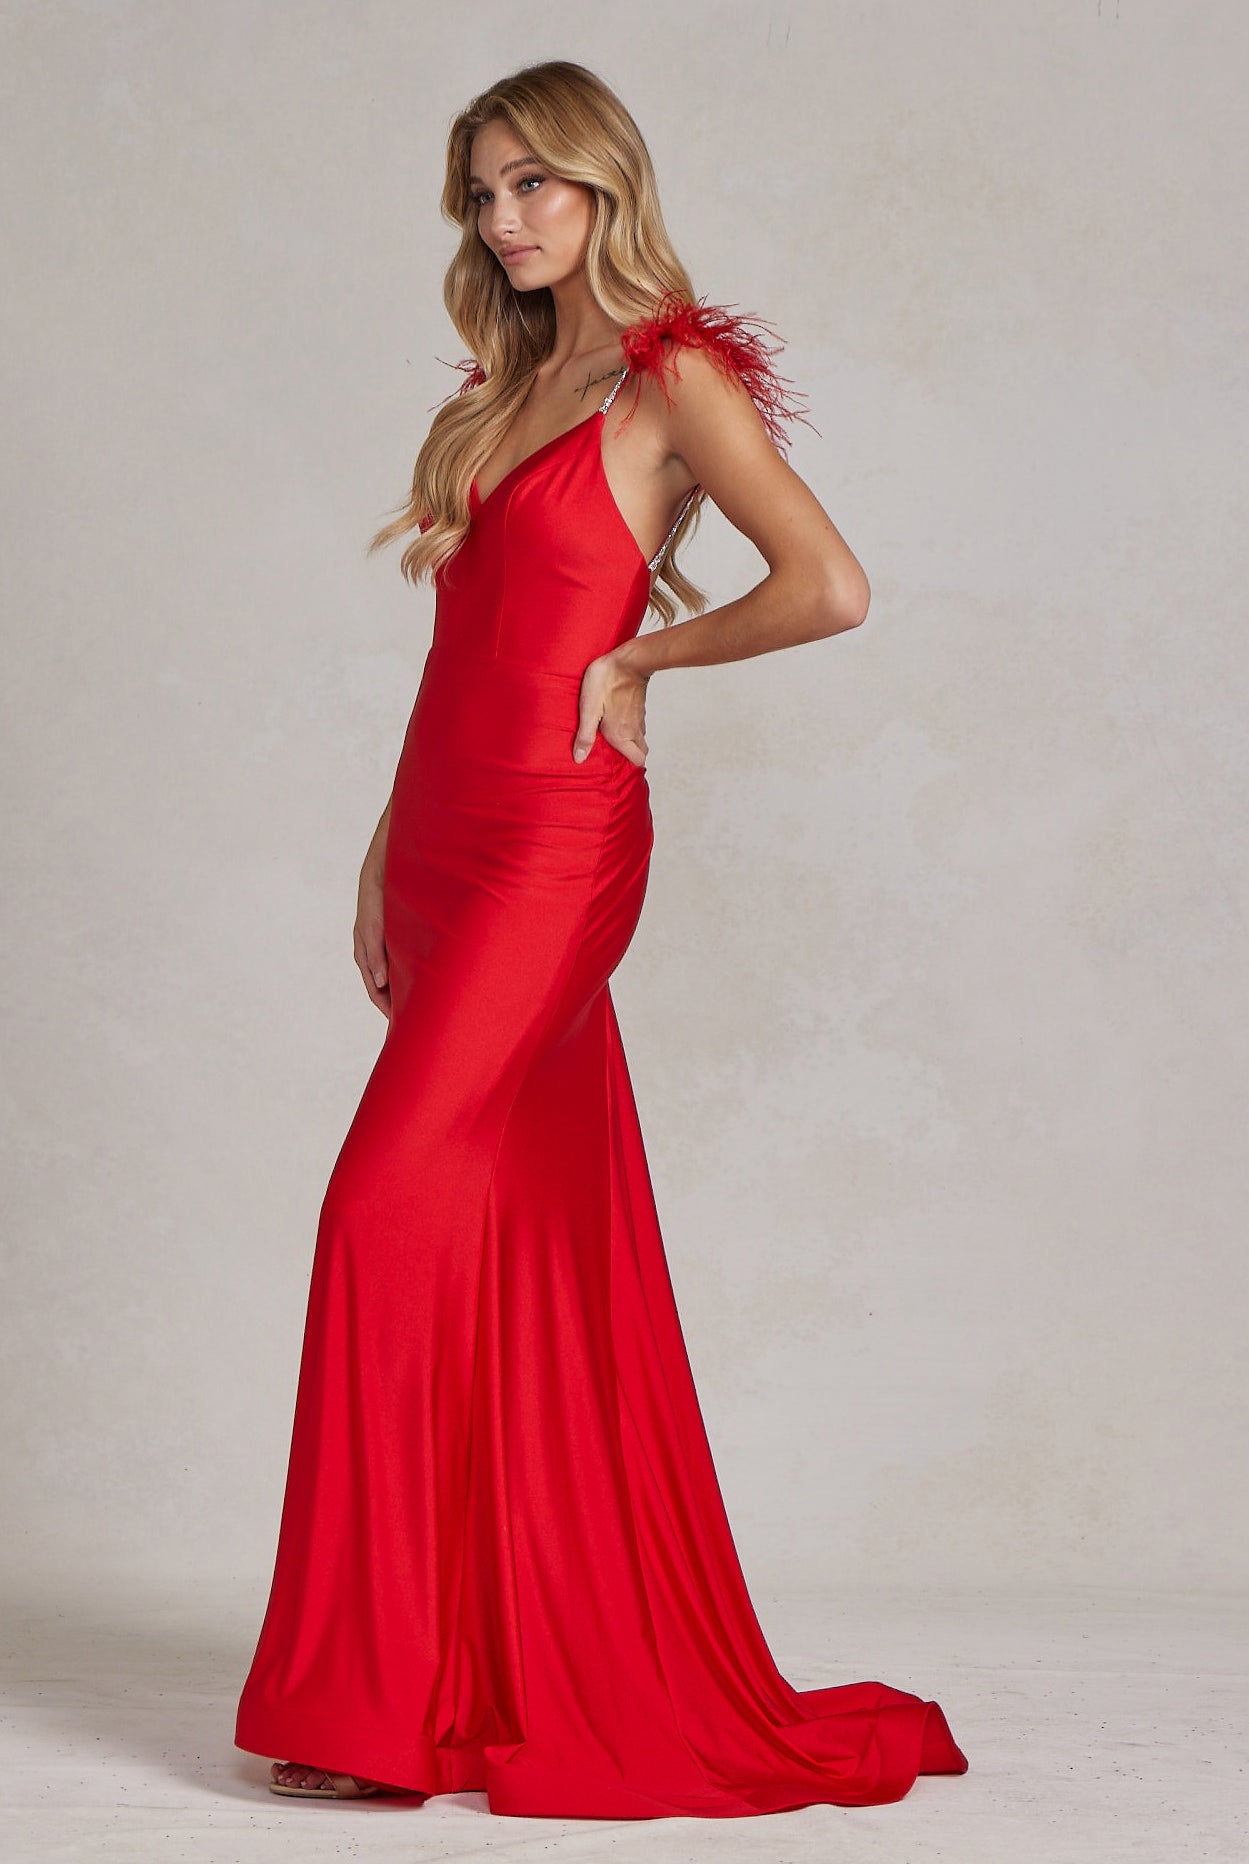 Mermaid Satin Embellished Feather Open Back Long Prom Dress NXT1138-Prom Dress-smcfashion.com